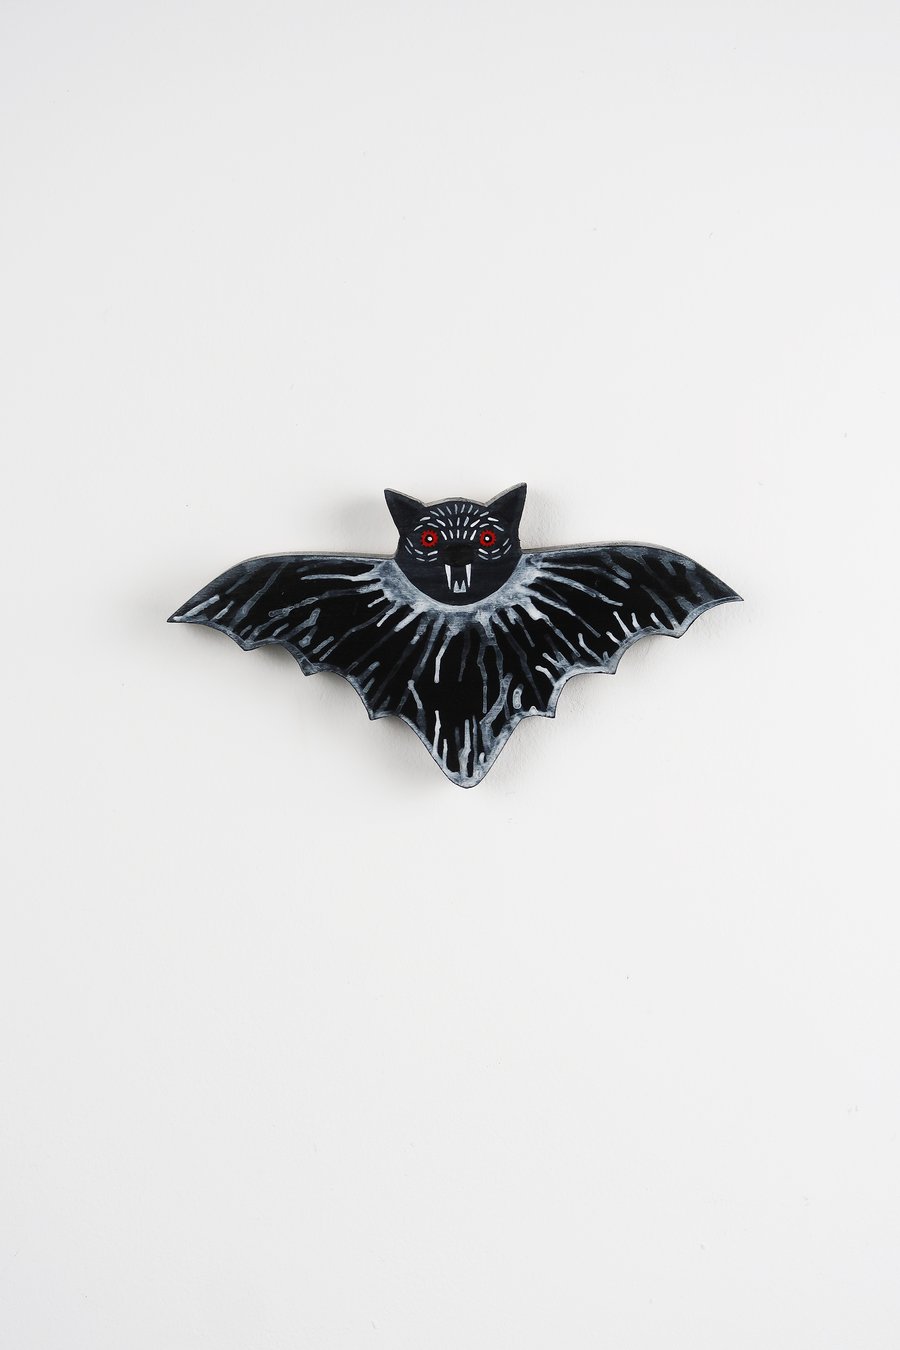 Flying bat wall decoration, spooky ornament, creepy cute halloween bat decor.